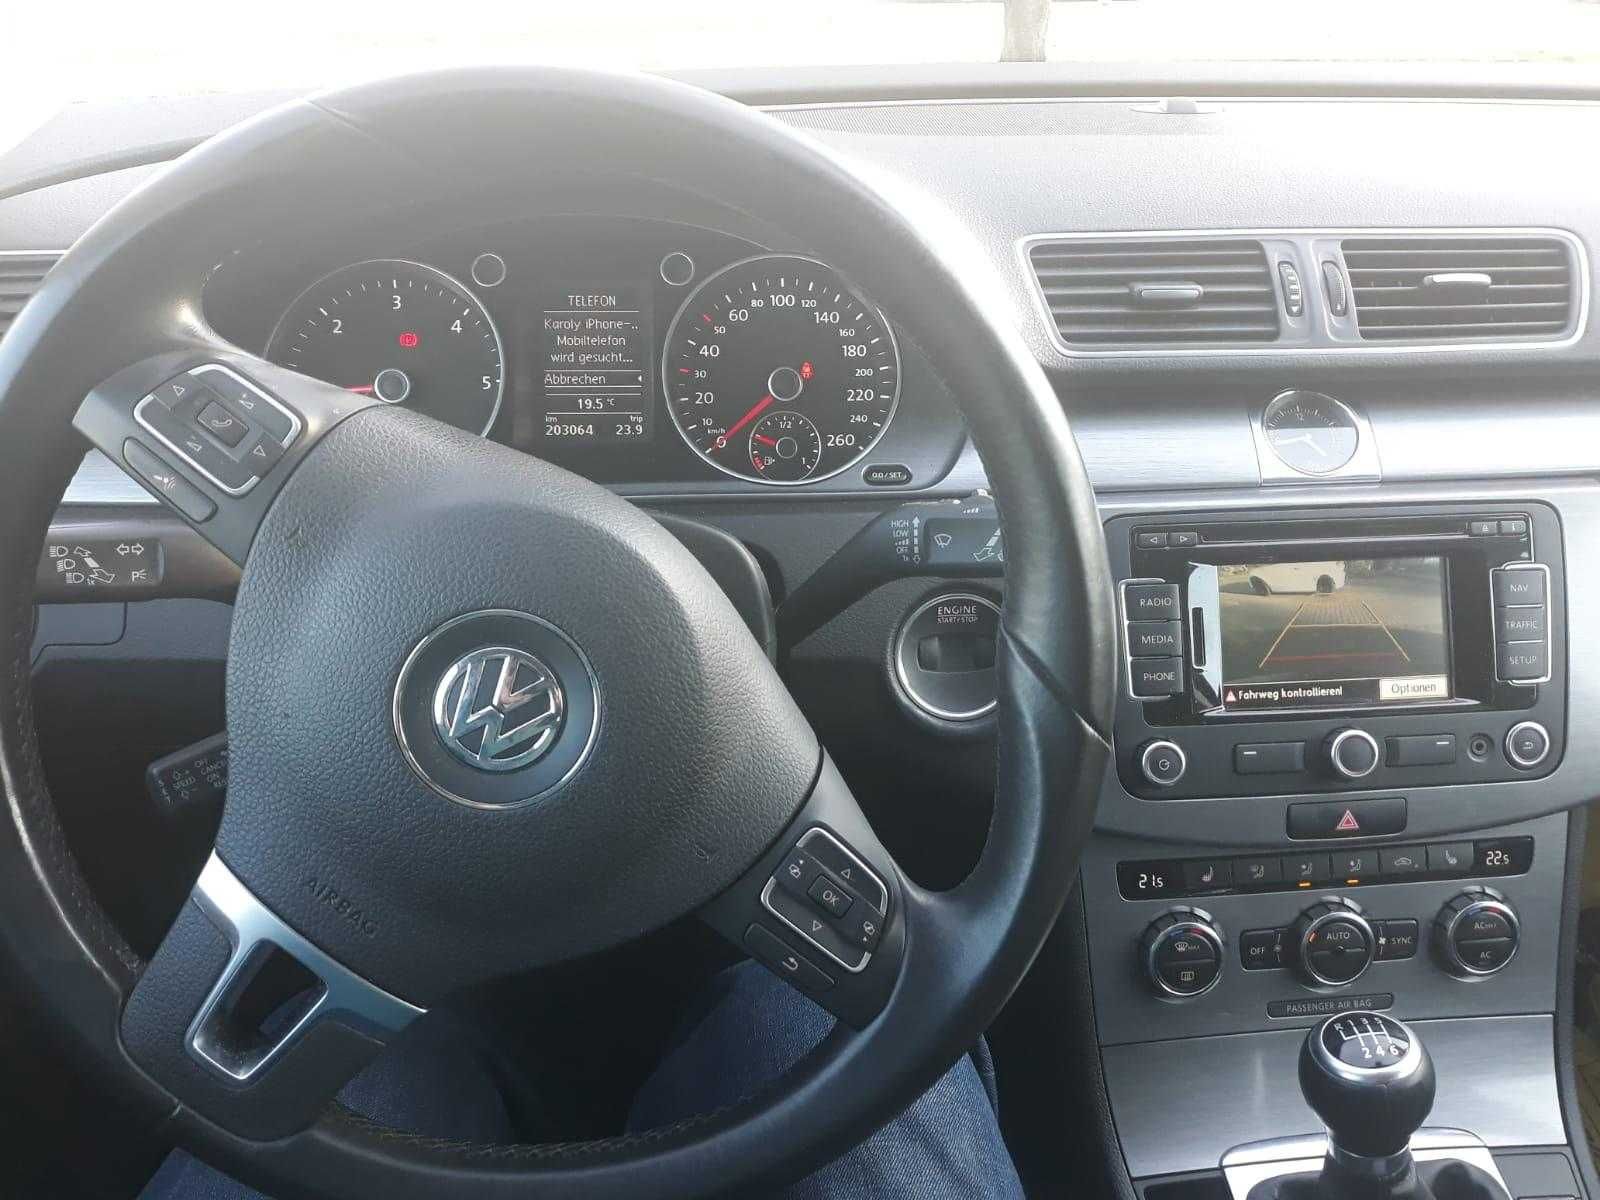 VW Passat 2.0 140 Cp,2012 Euro 5, Xenon, Navi,Full LED,pornire buton